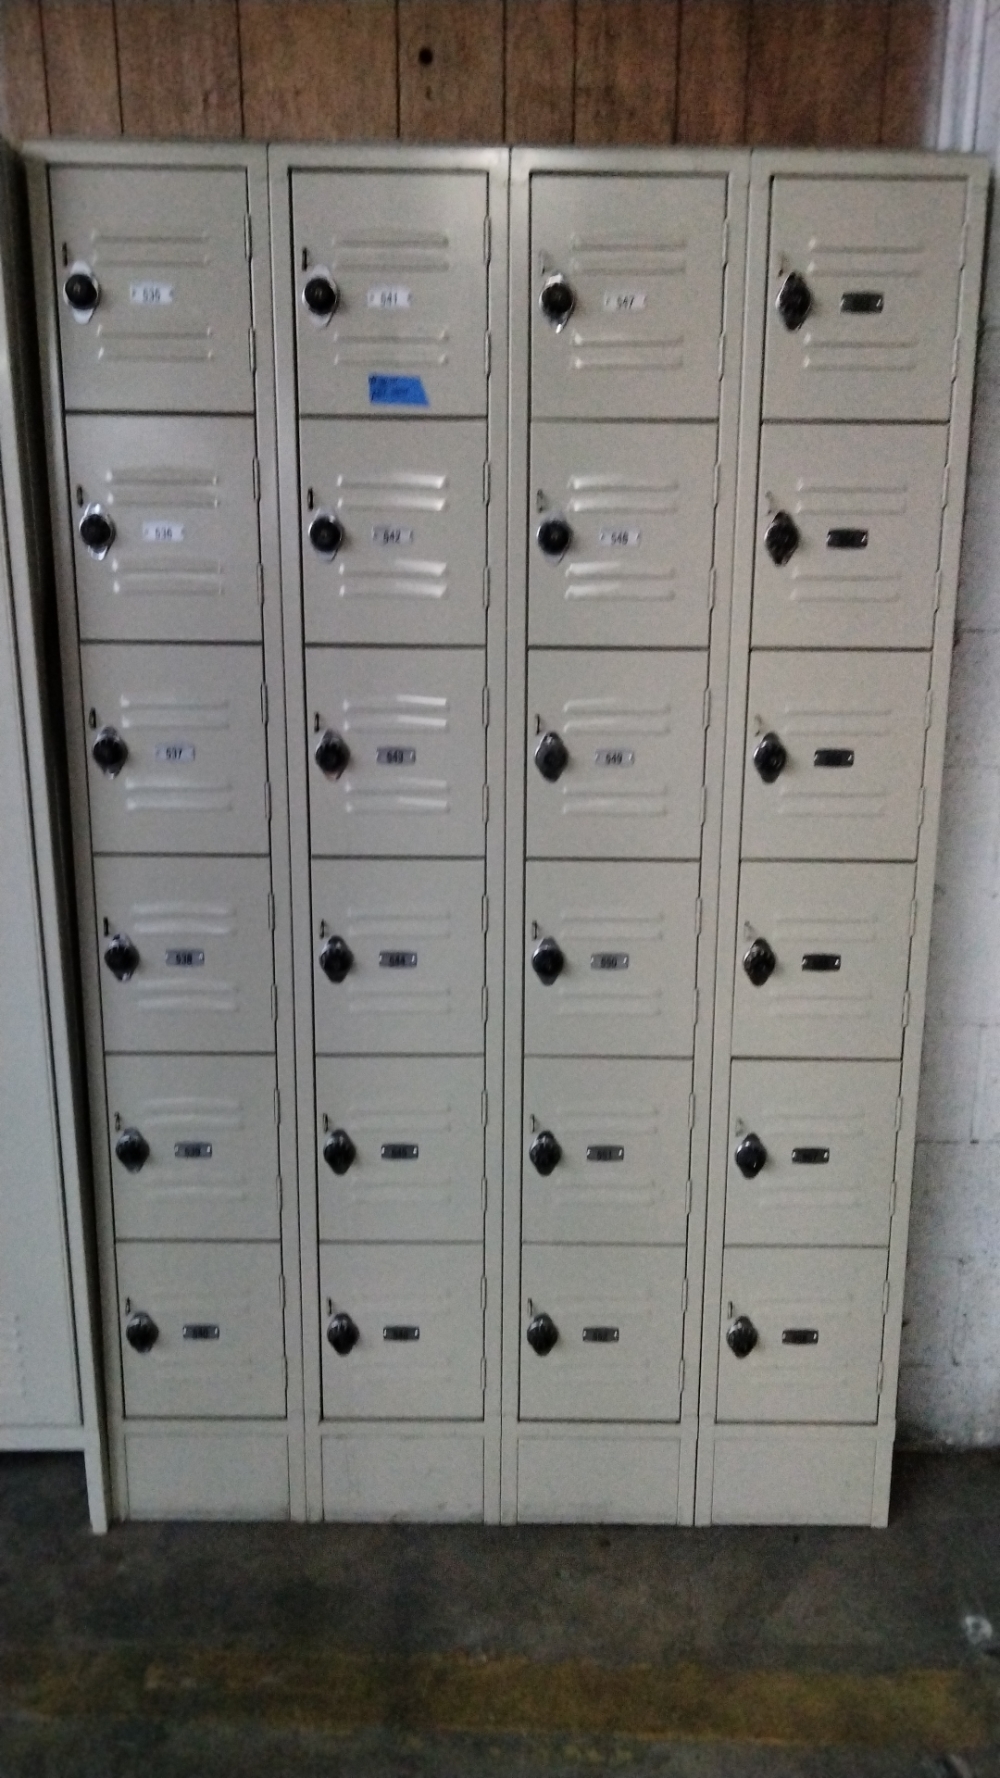  24 individual lockers with combo locks